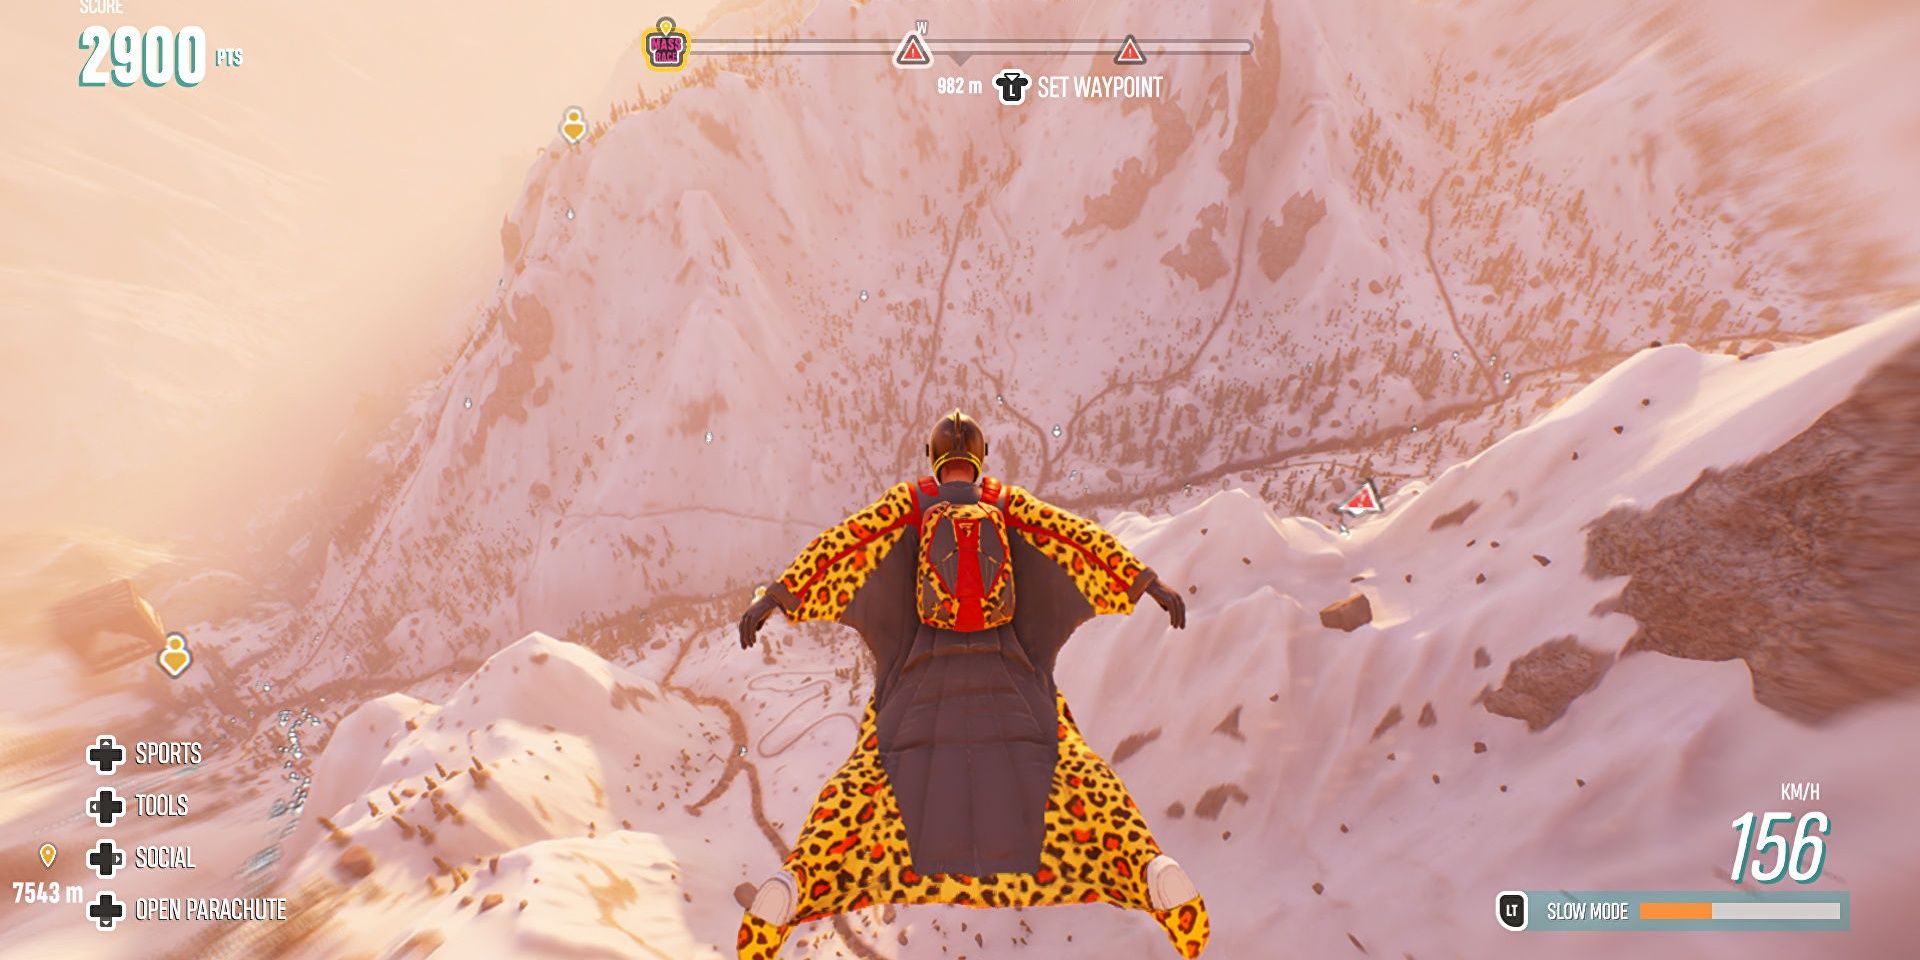 Freefall wingsuit gameplay in Riders Republic